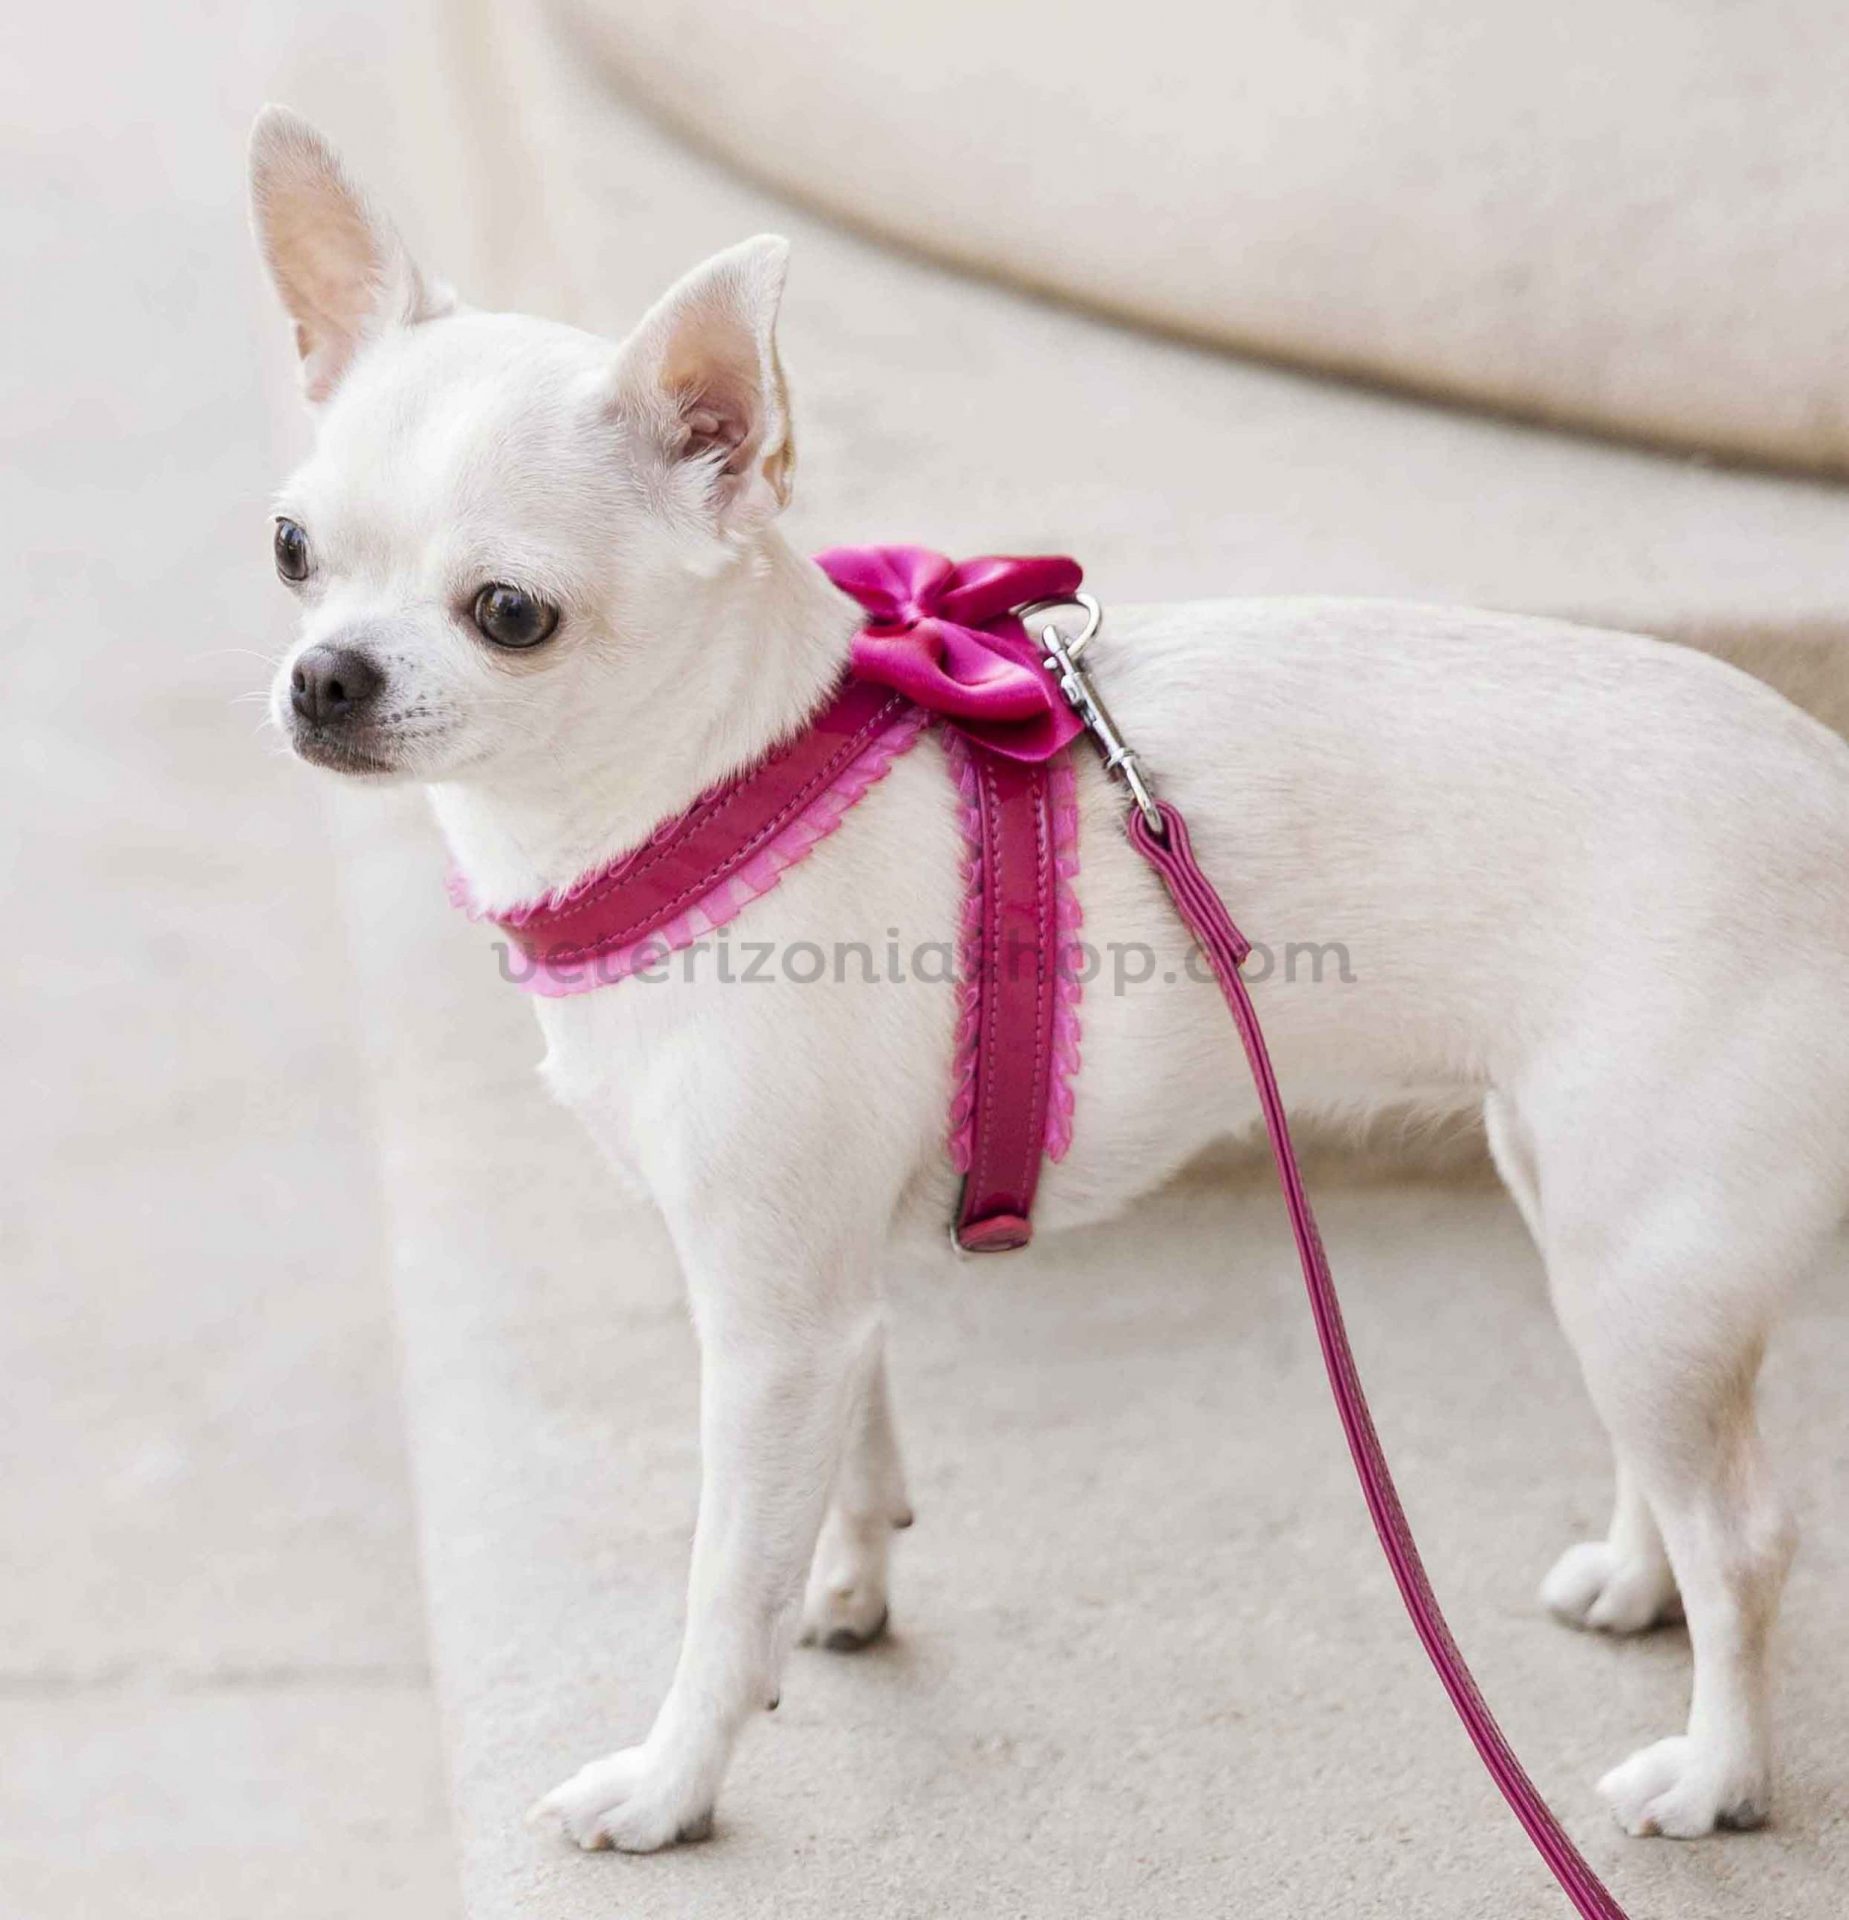 Arnés perro pequeño Rosa Luxury - Veterizonia